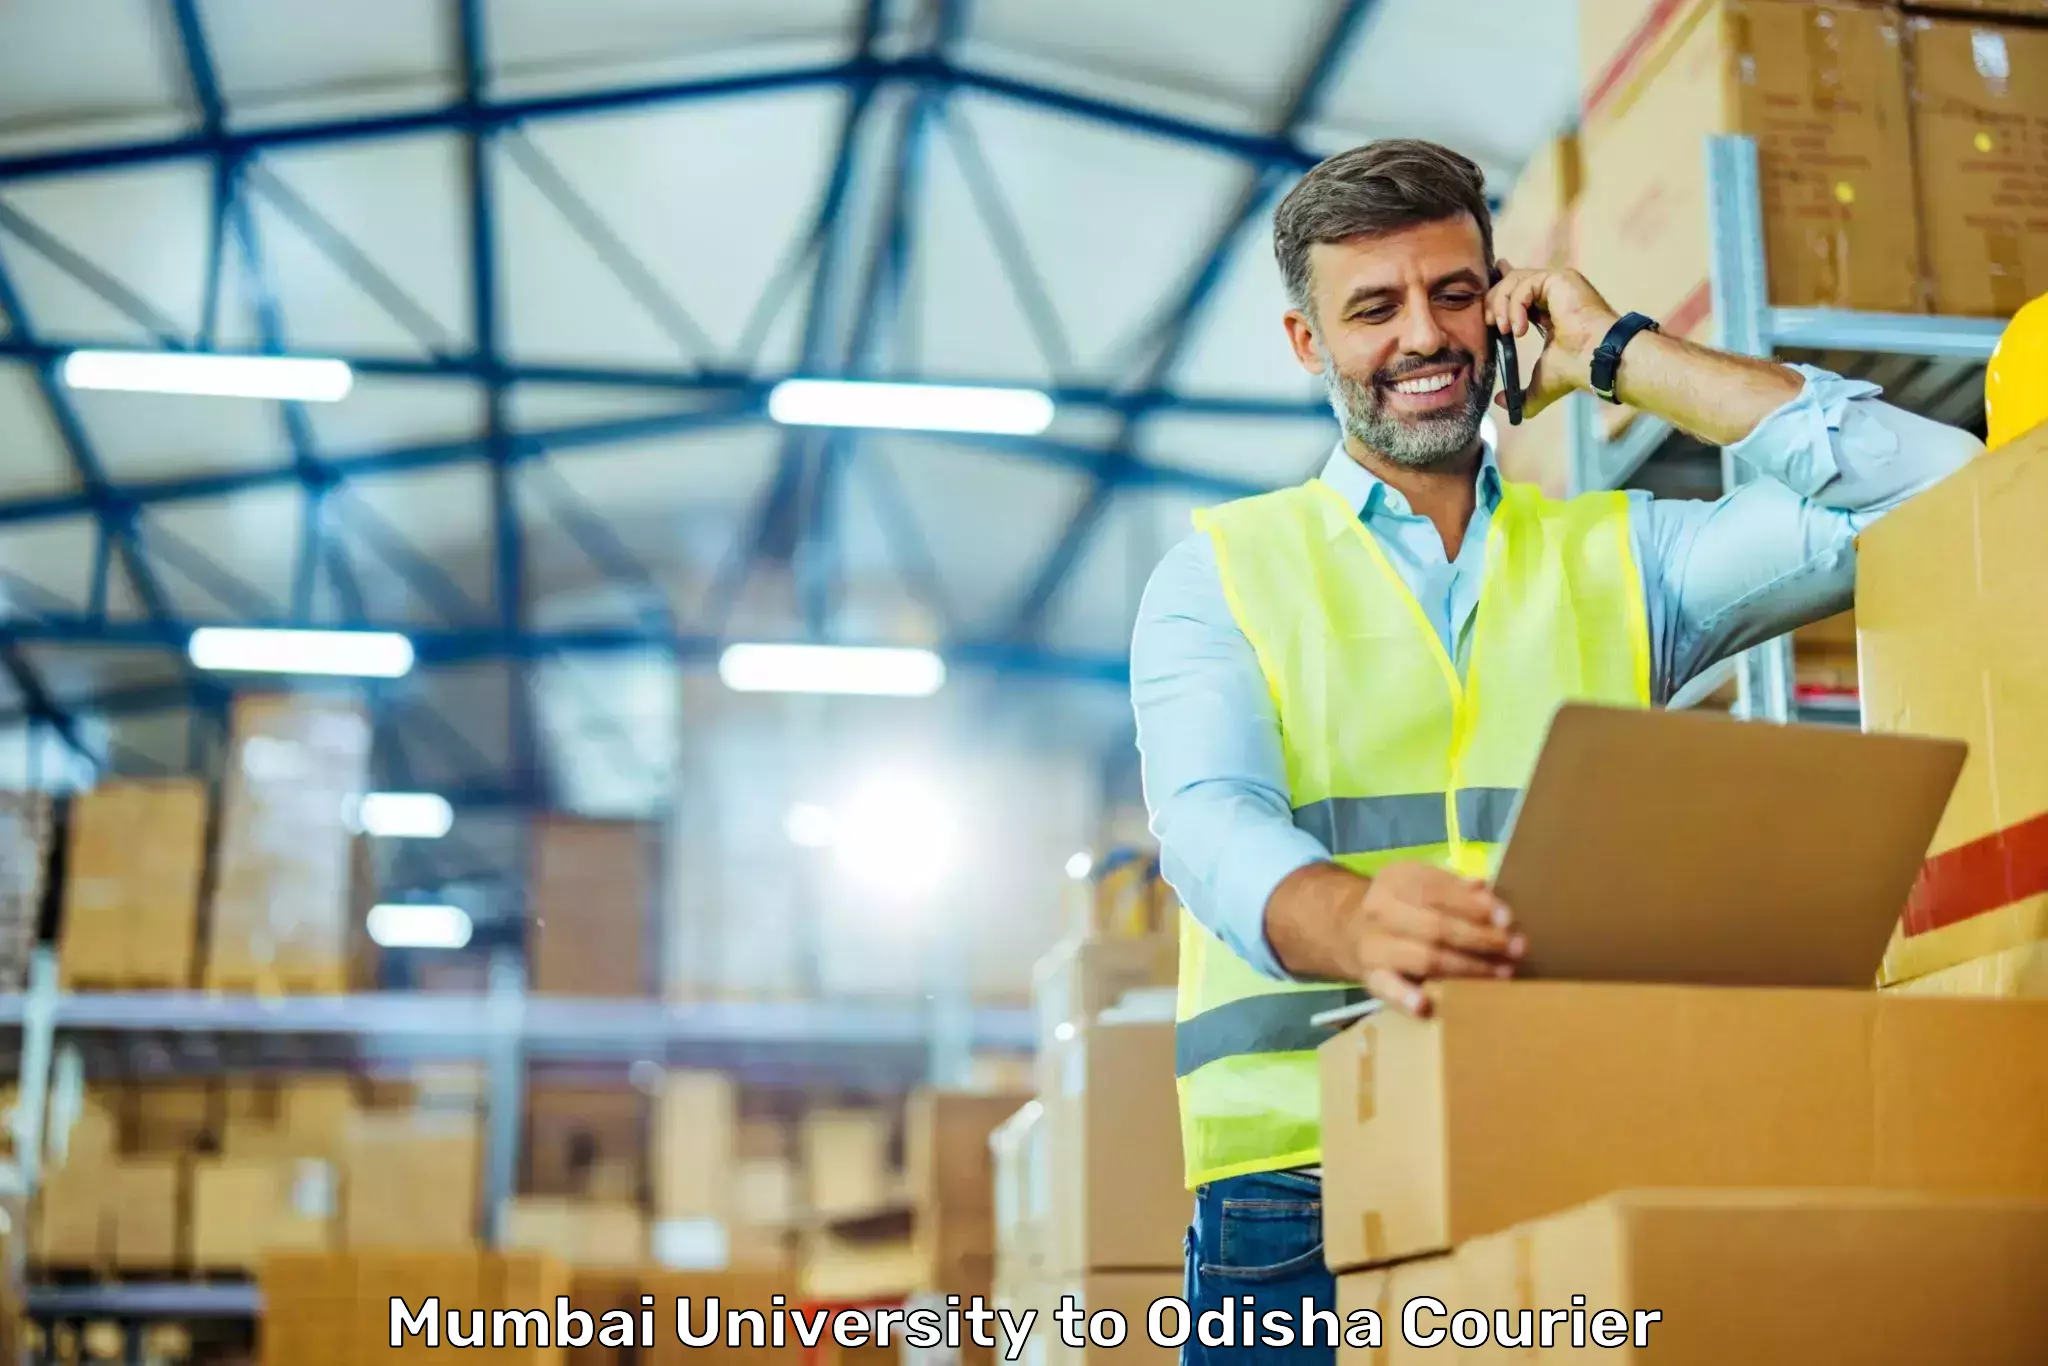 Nationwide courier service Mumbai University to Dandisahi